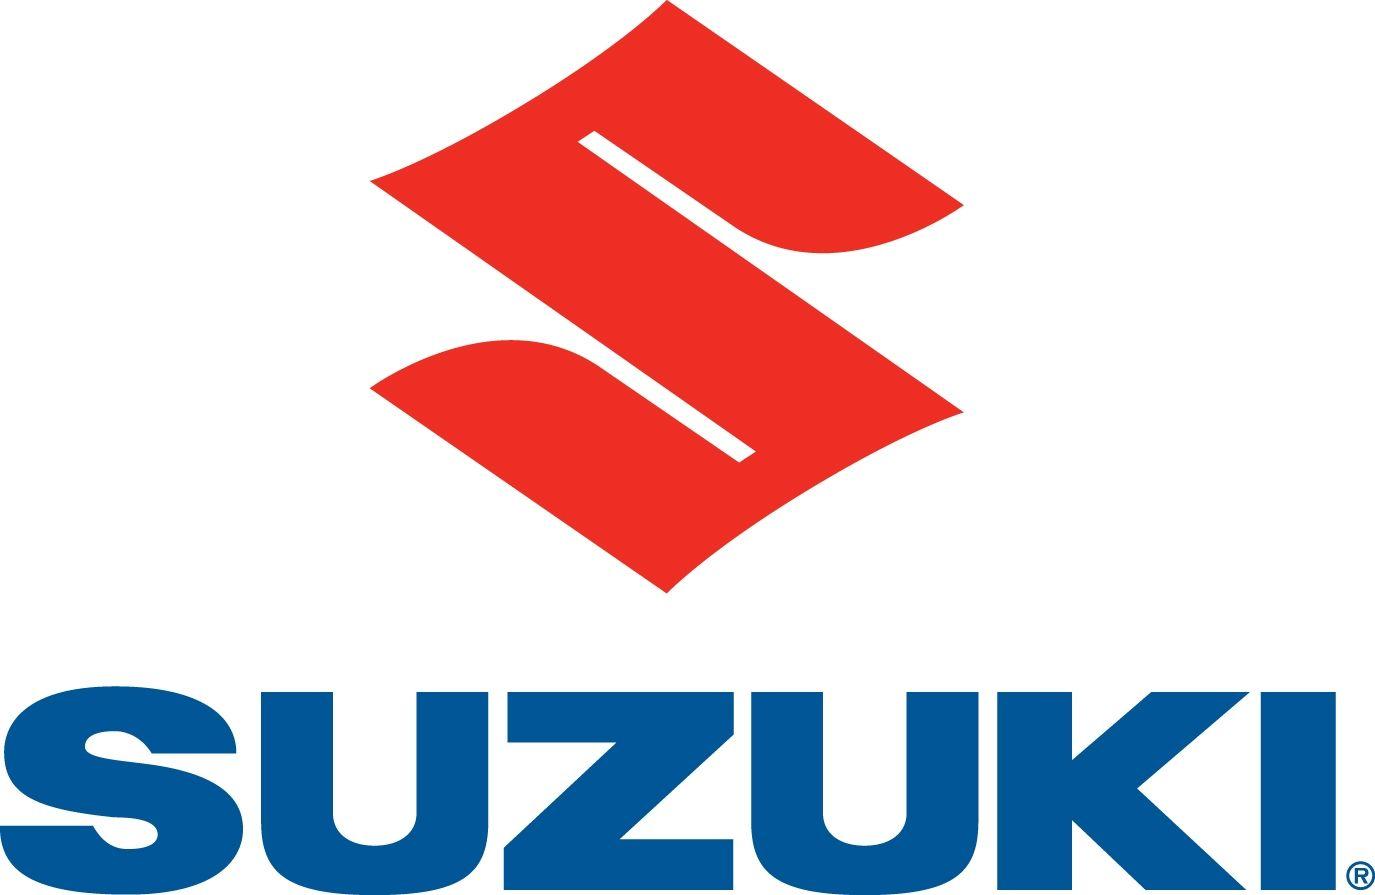 All Red for All Company Logo - Suzuki Logo, Suzuki Car Symbol Meaning and History | Car Brand Names.com